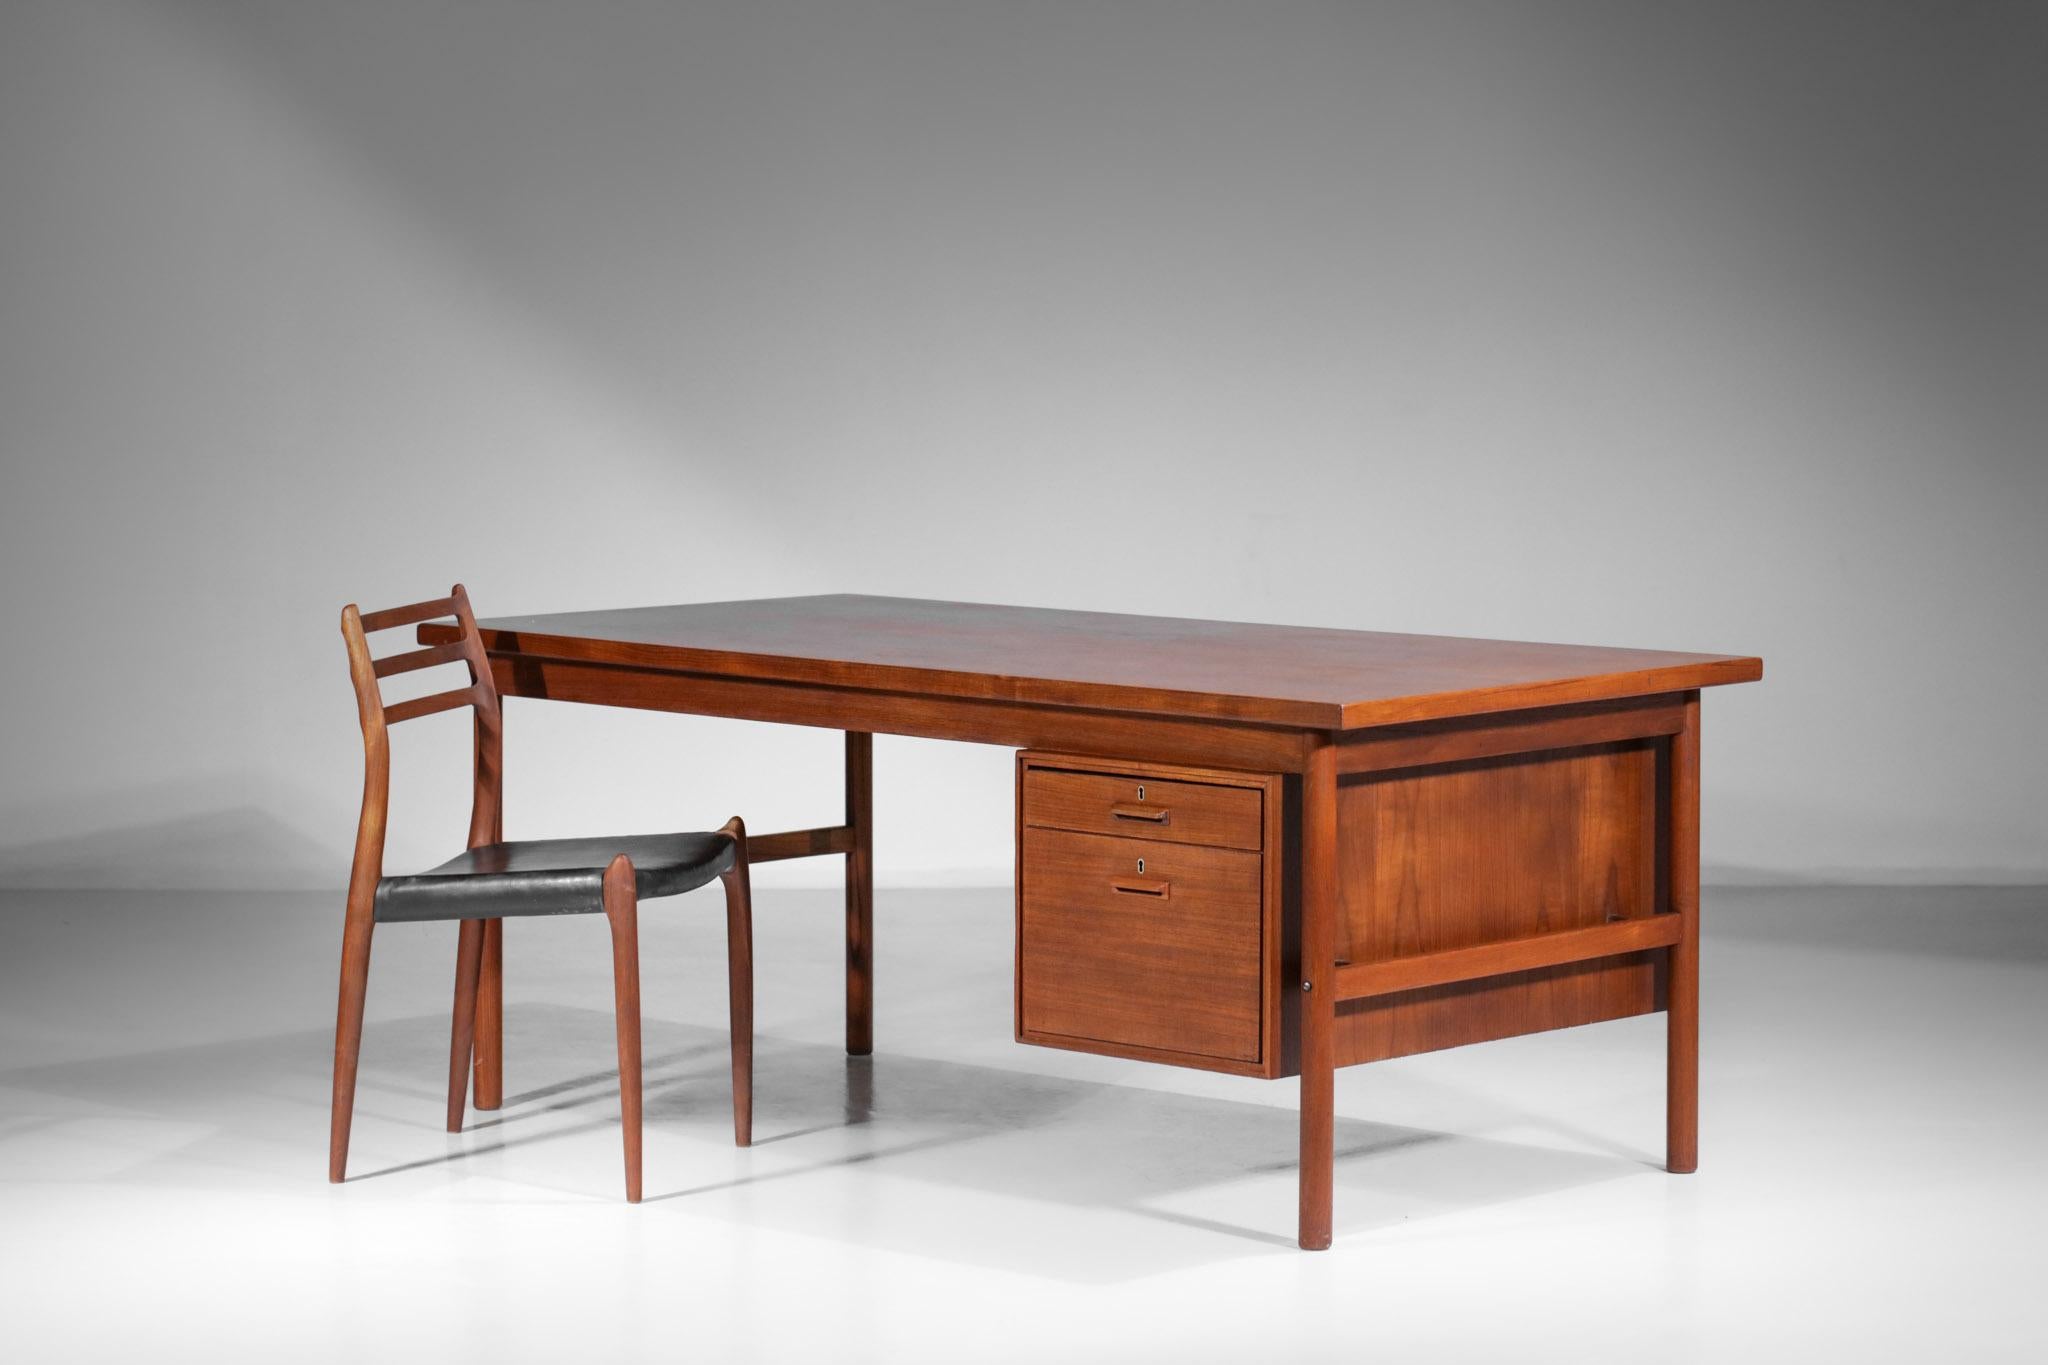 60s style desk